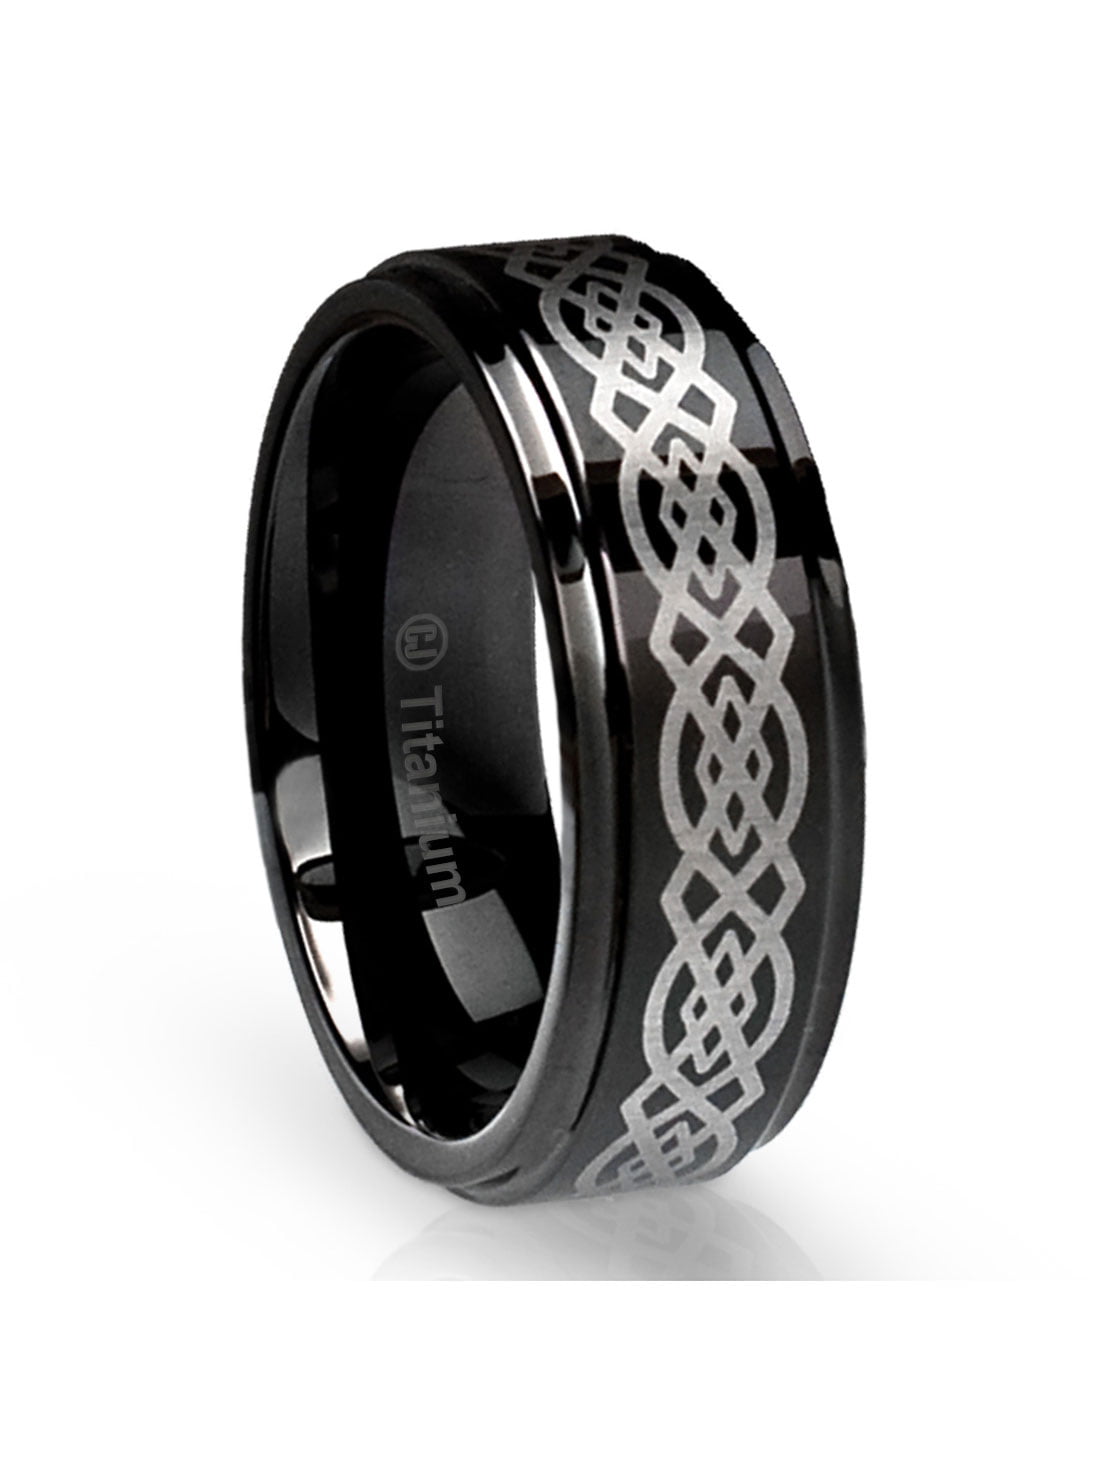 Mens Wedding Band in Titanium 8MM Ring Black with Celtic Design